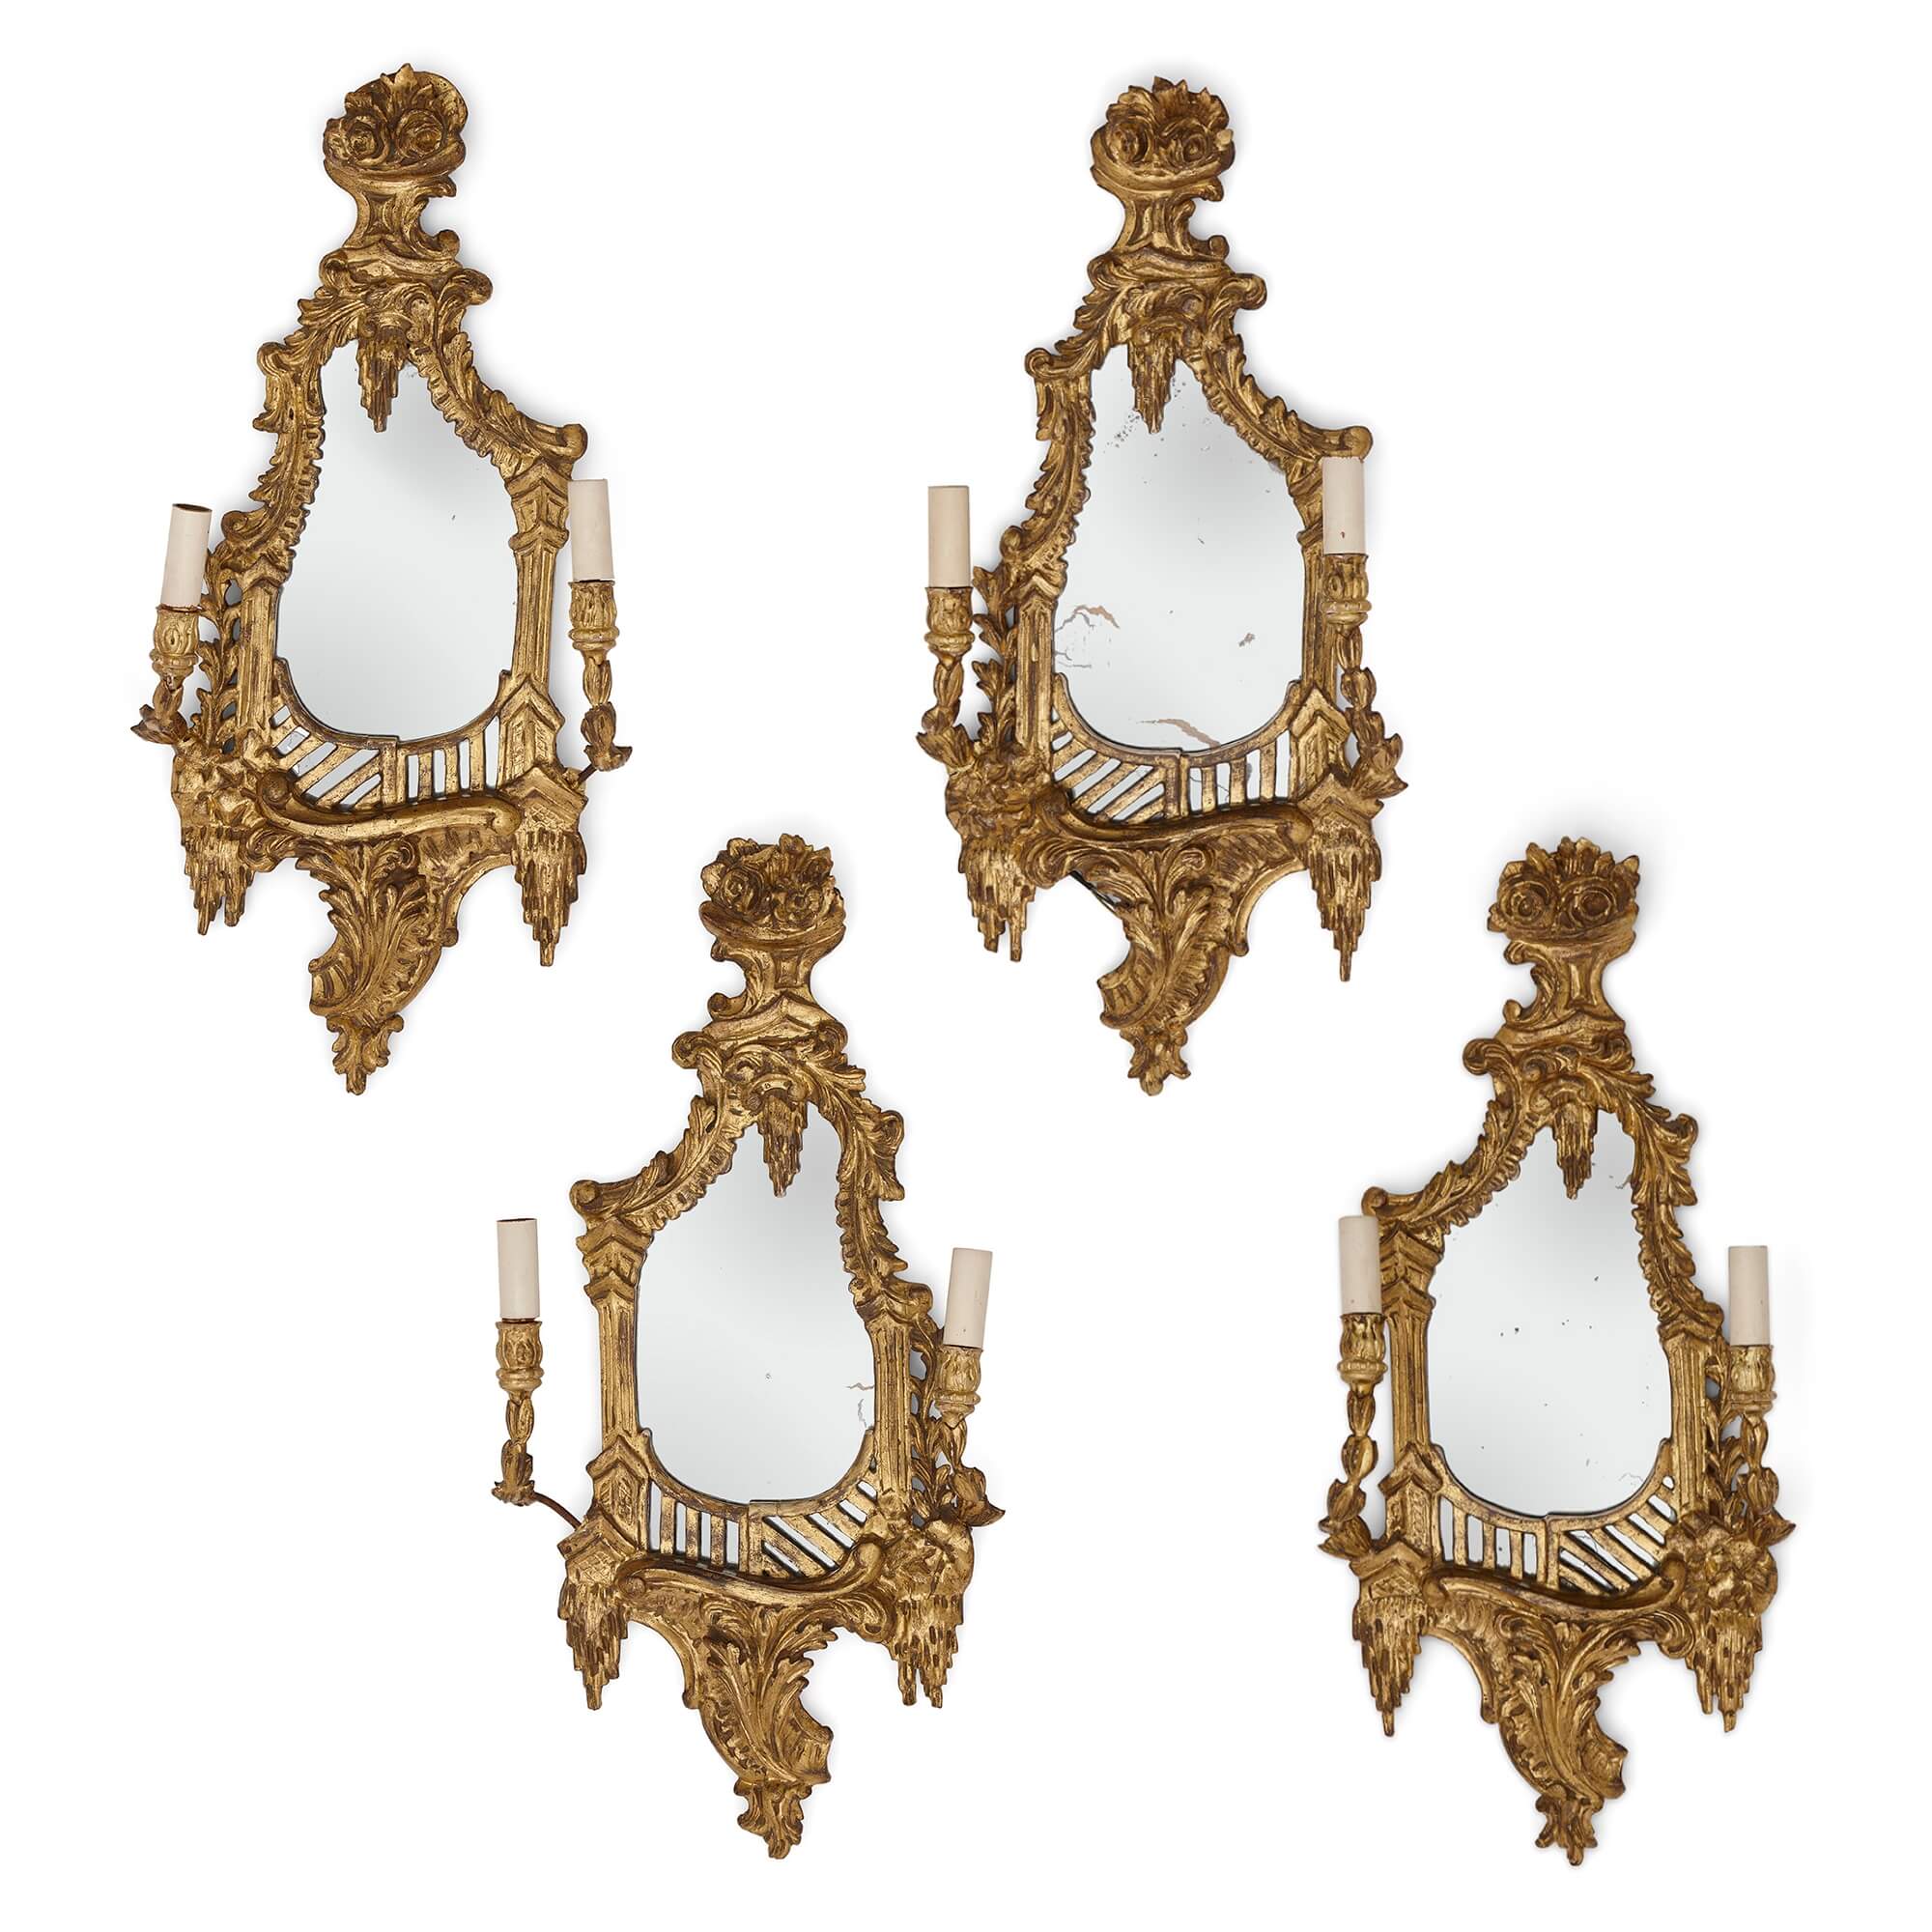 Four Antique French Girandoles in the Rococo-Style  